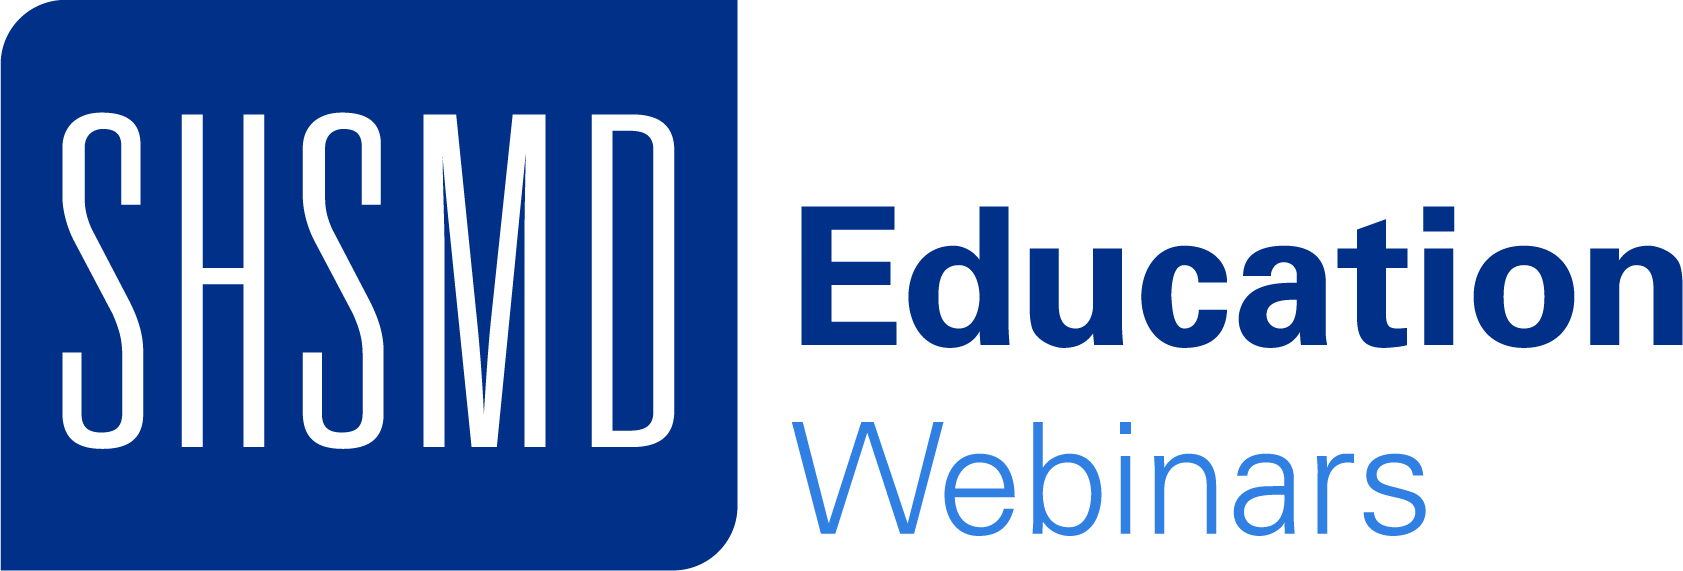 SHSMD Education logo